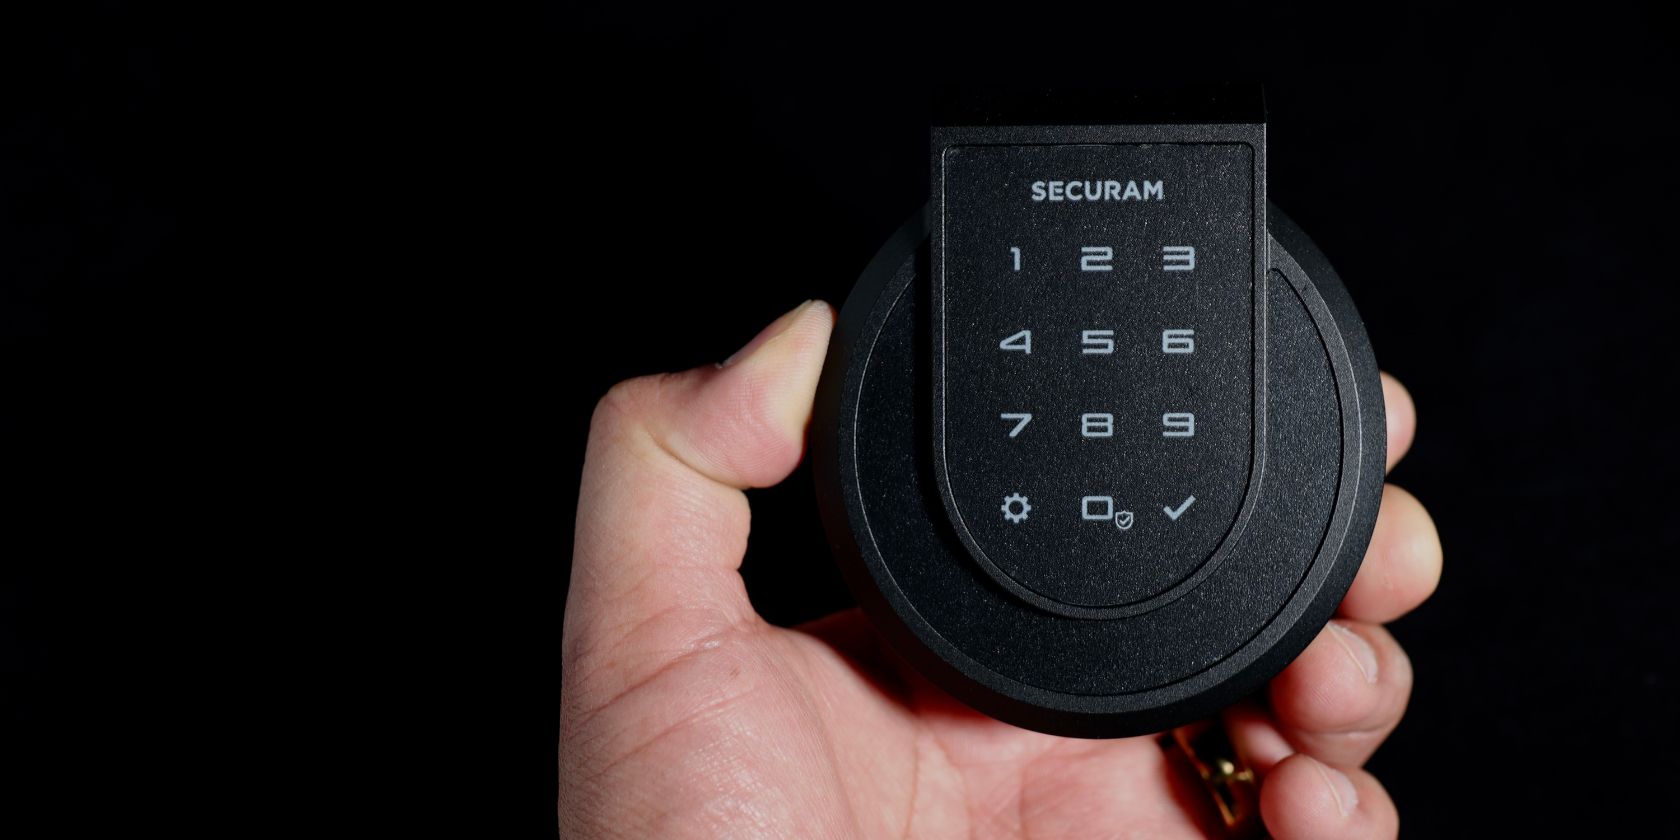 Securam Smart Lock In Hand Black Background